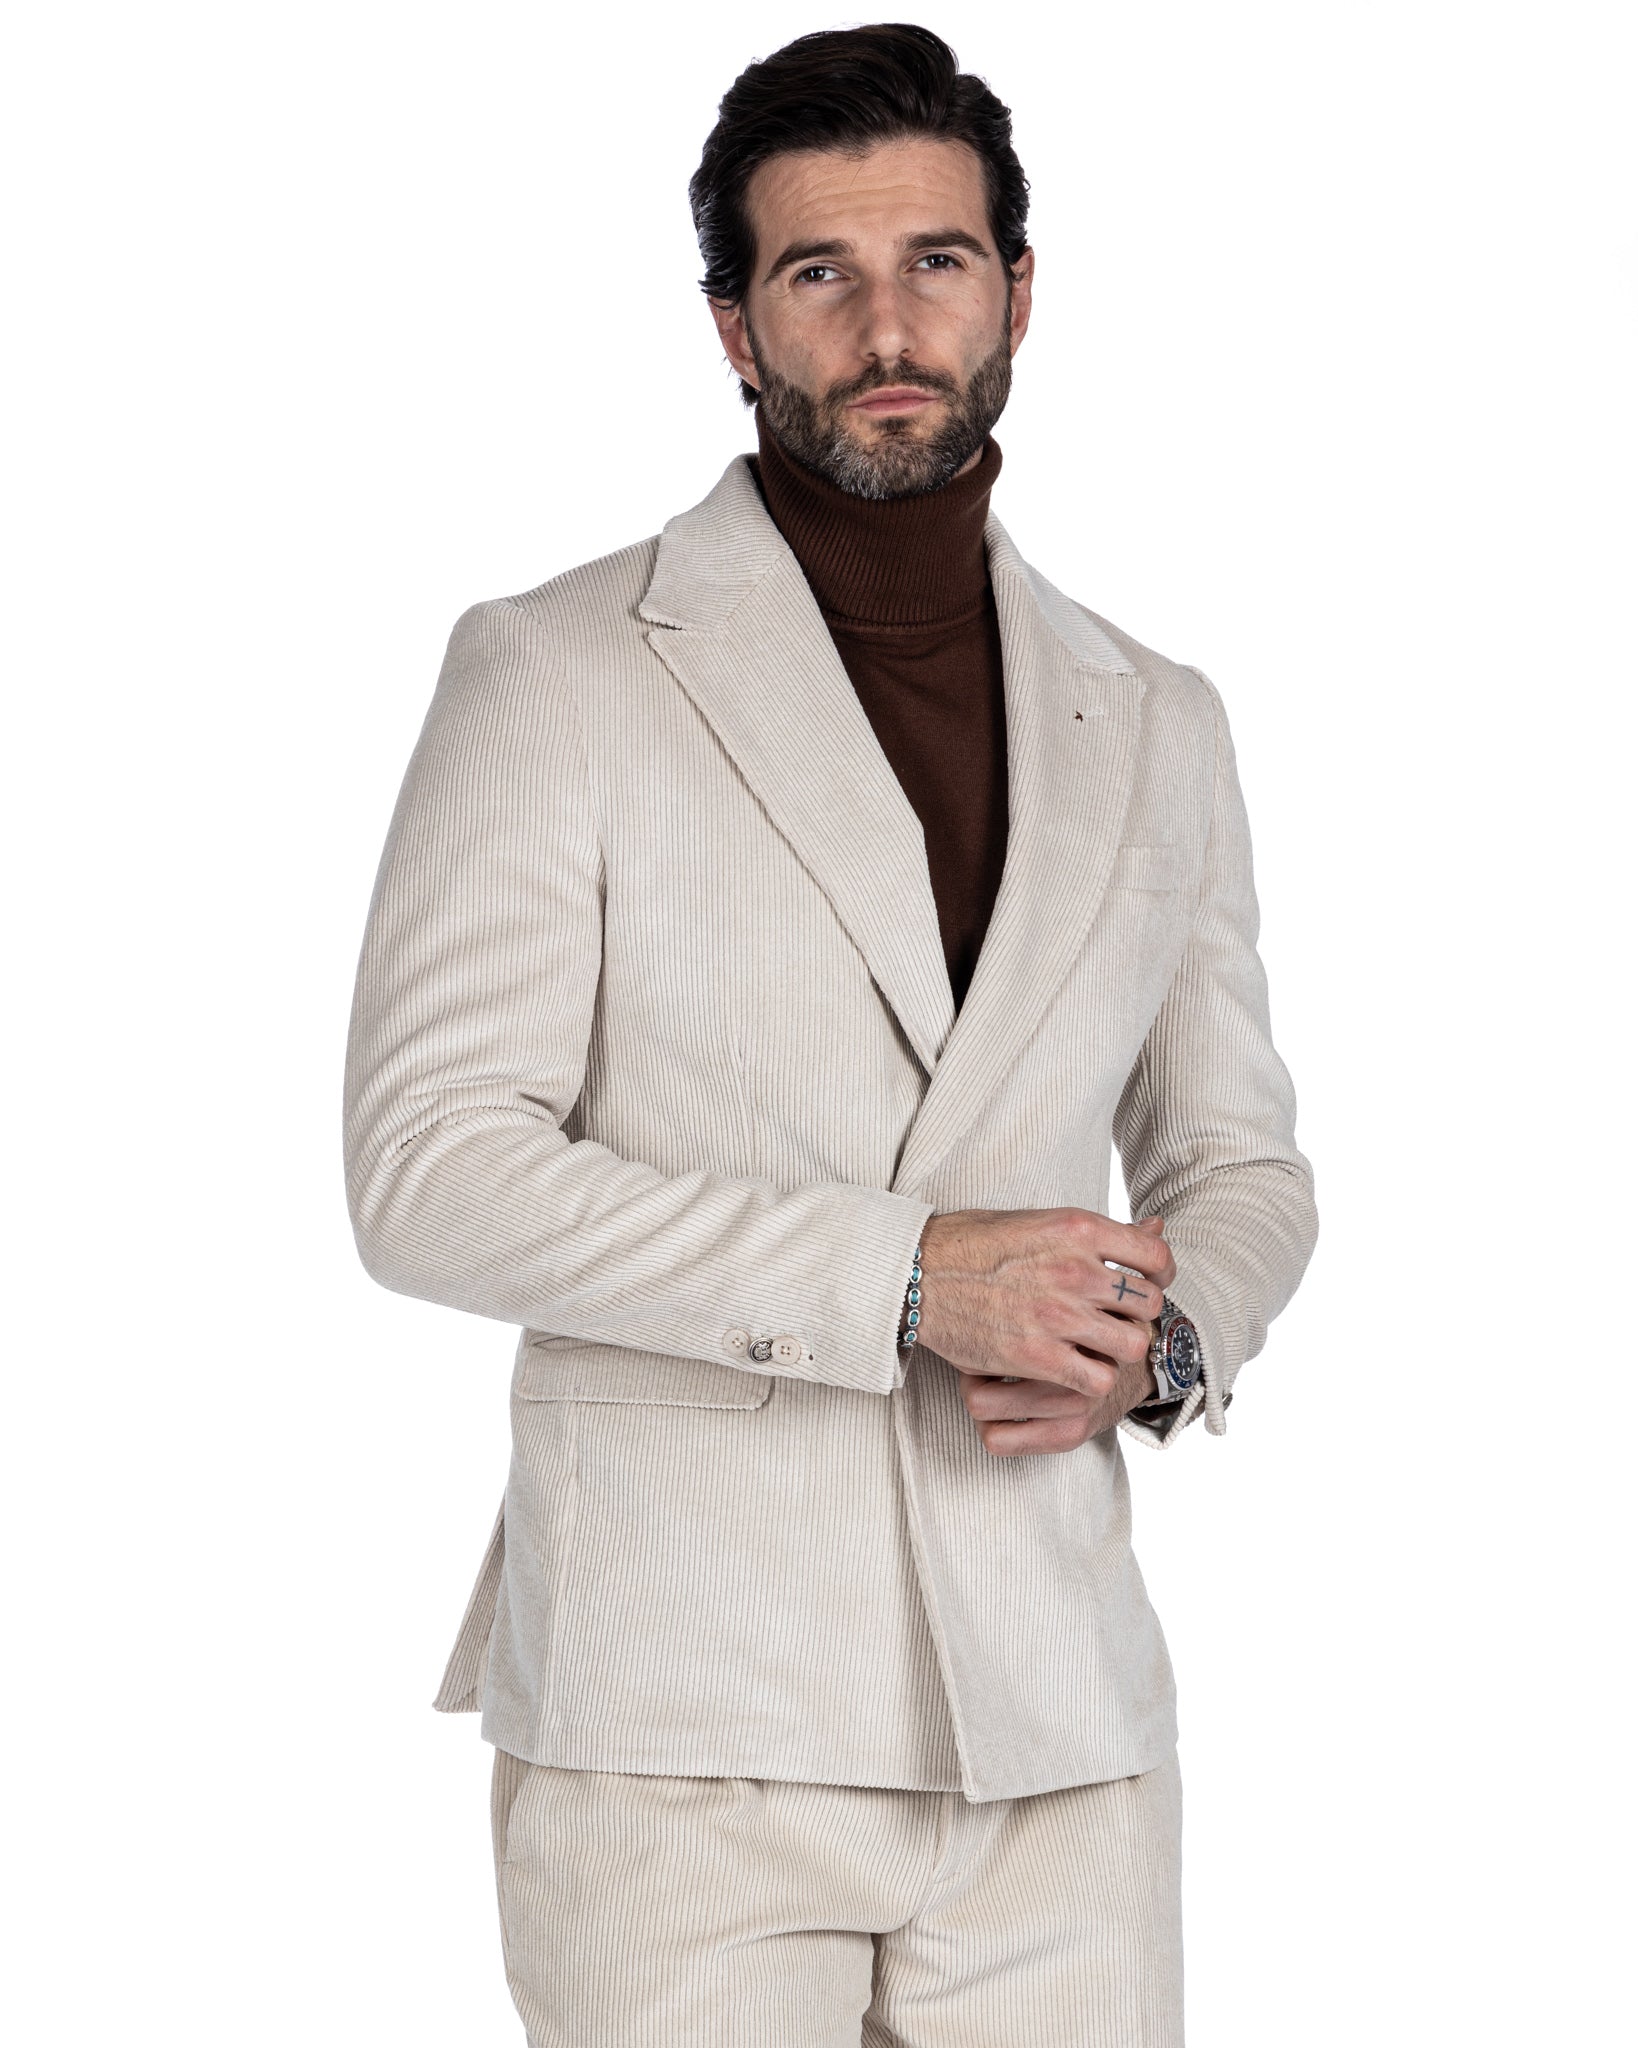 Mads - two-button cream velvet jacket